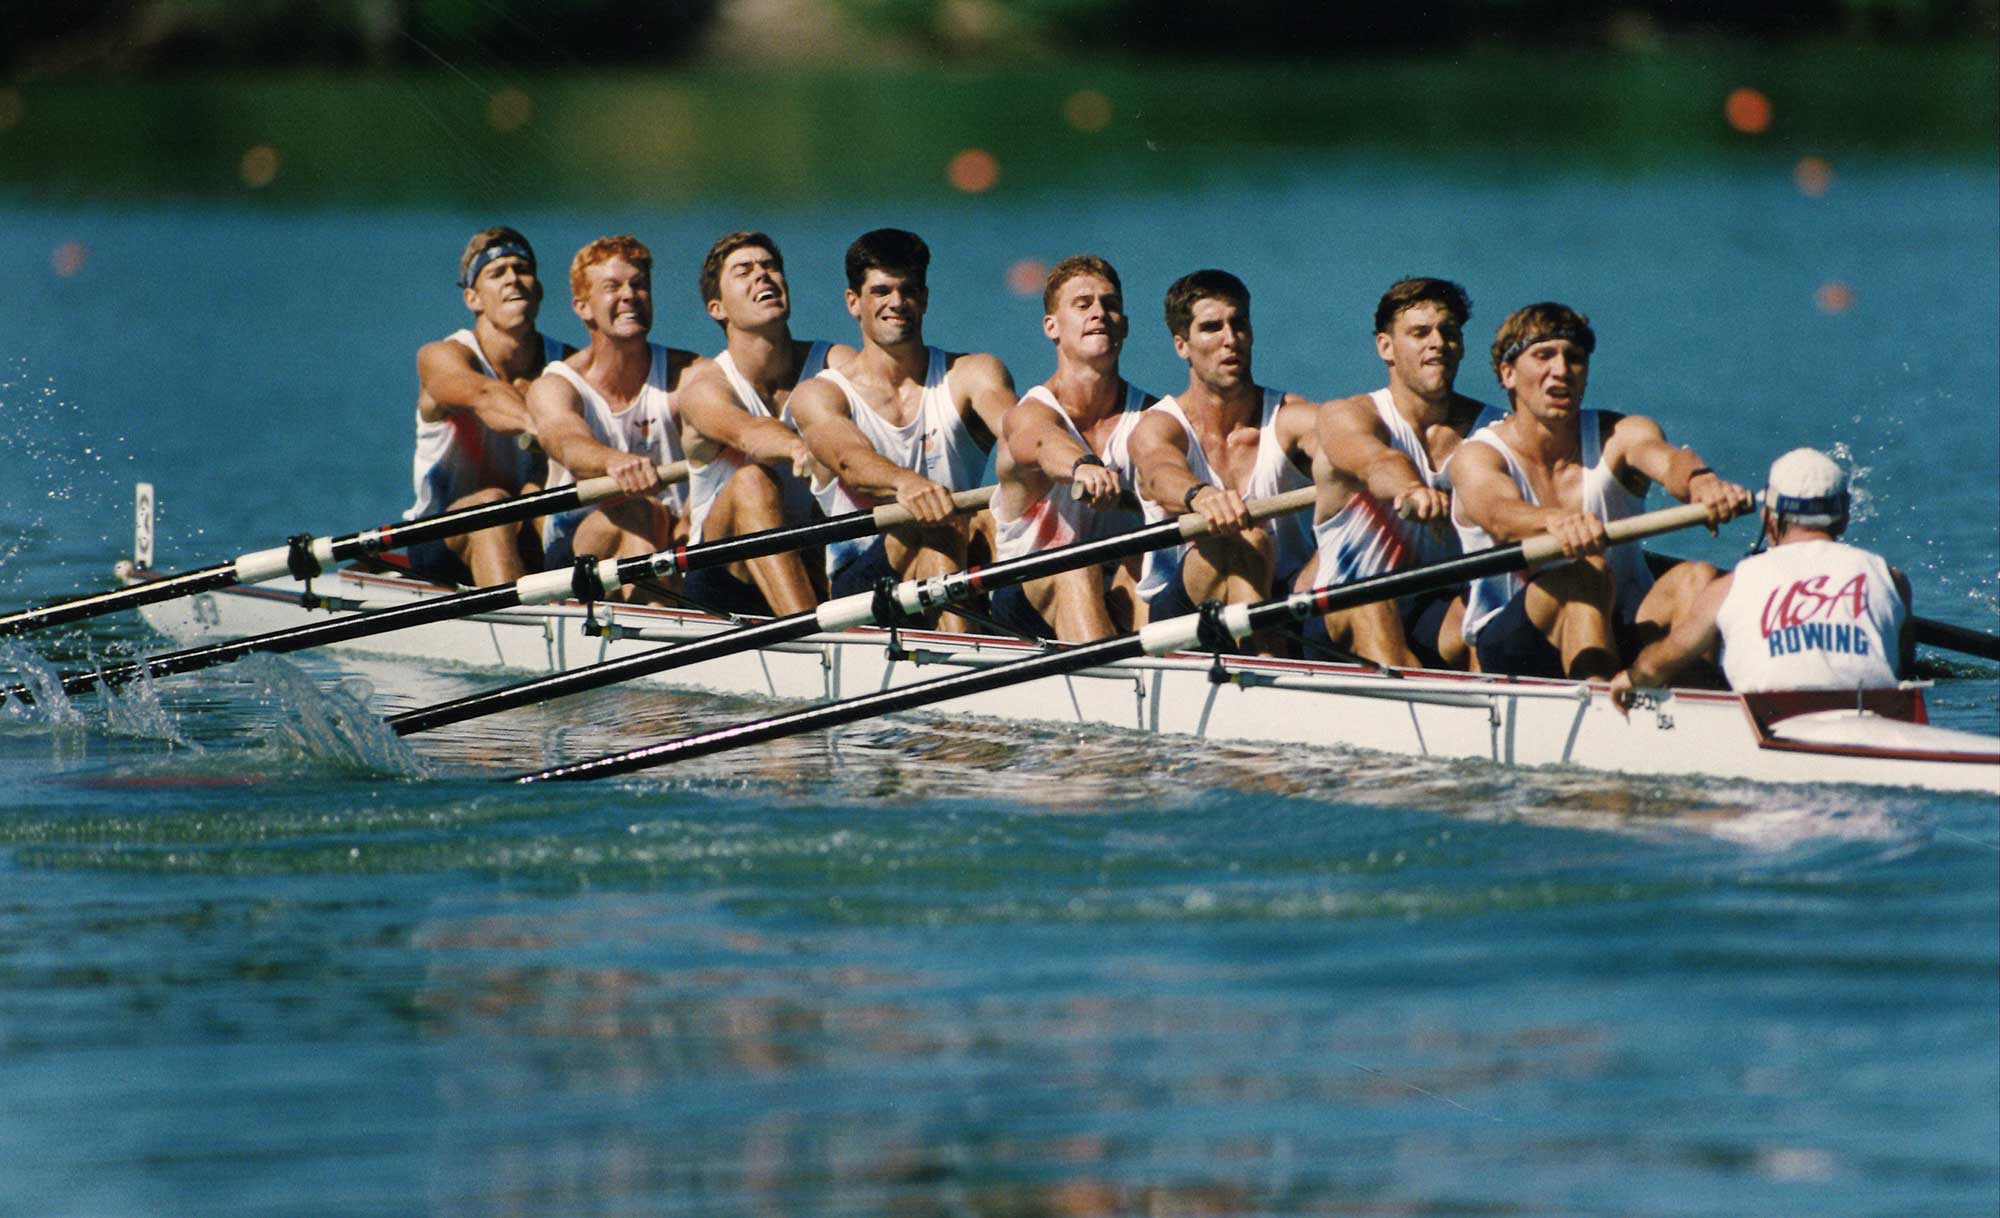 SU1993 Buffalo Rowing